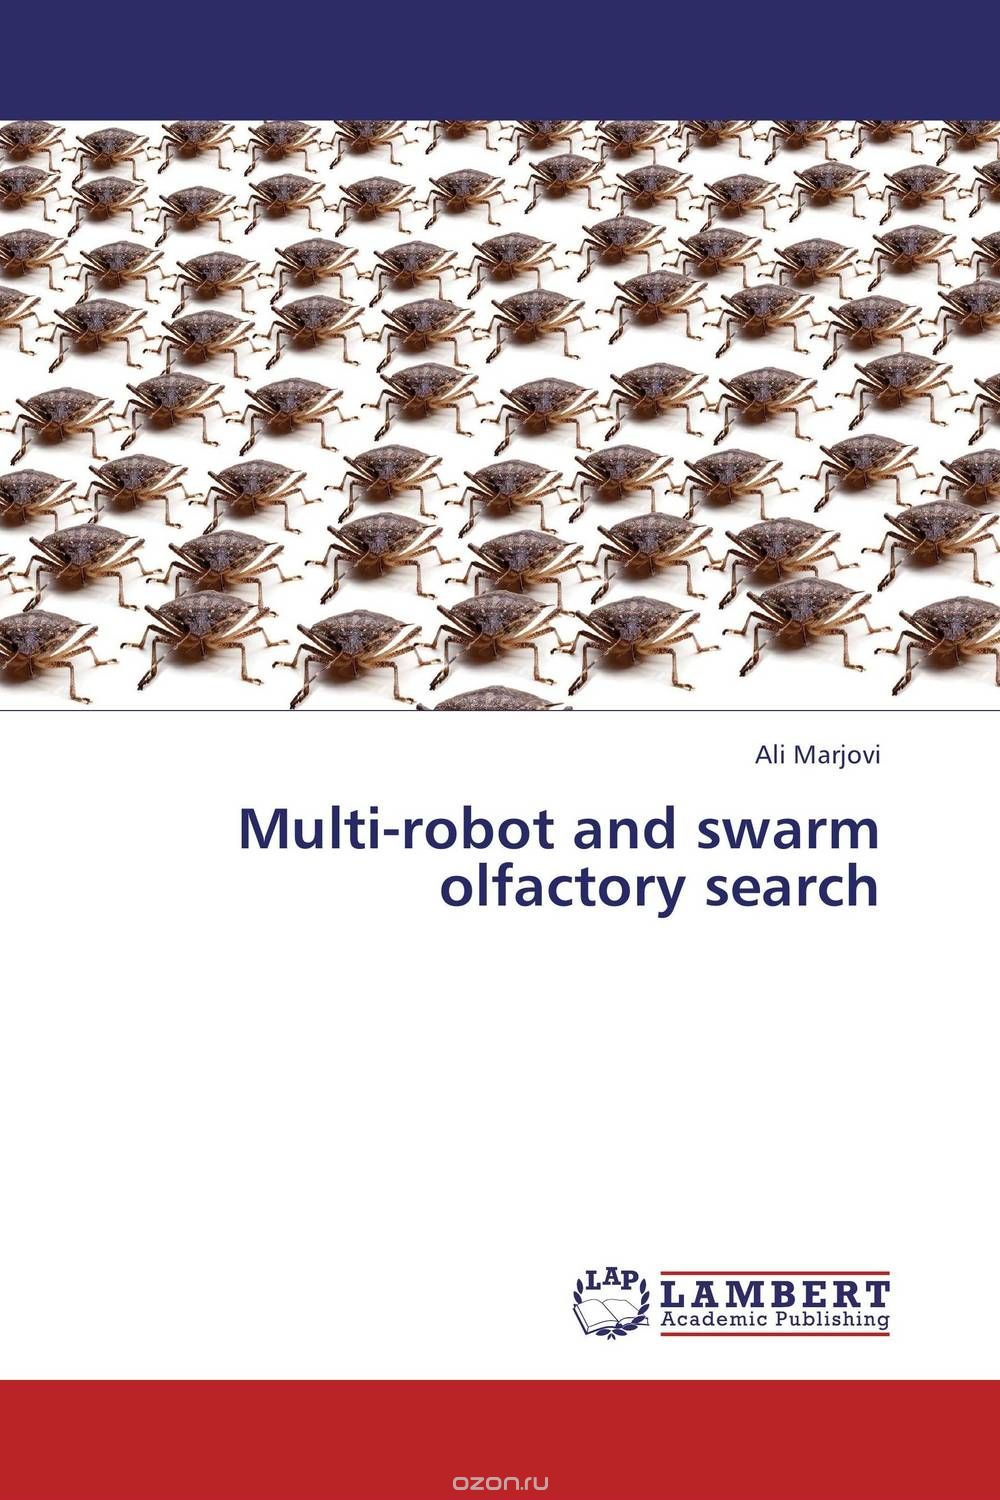 Скачать книгу "Multi-robot and swarm olfactory search"